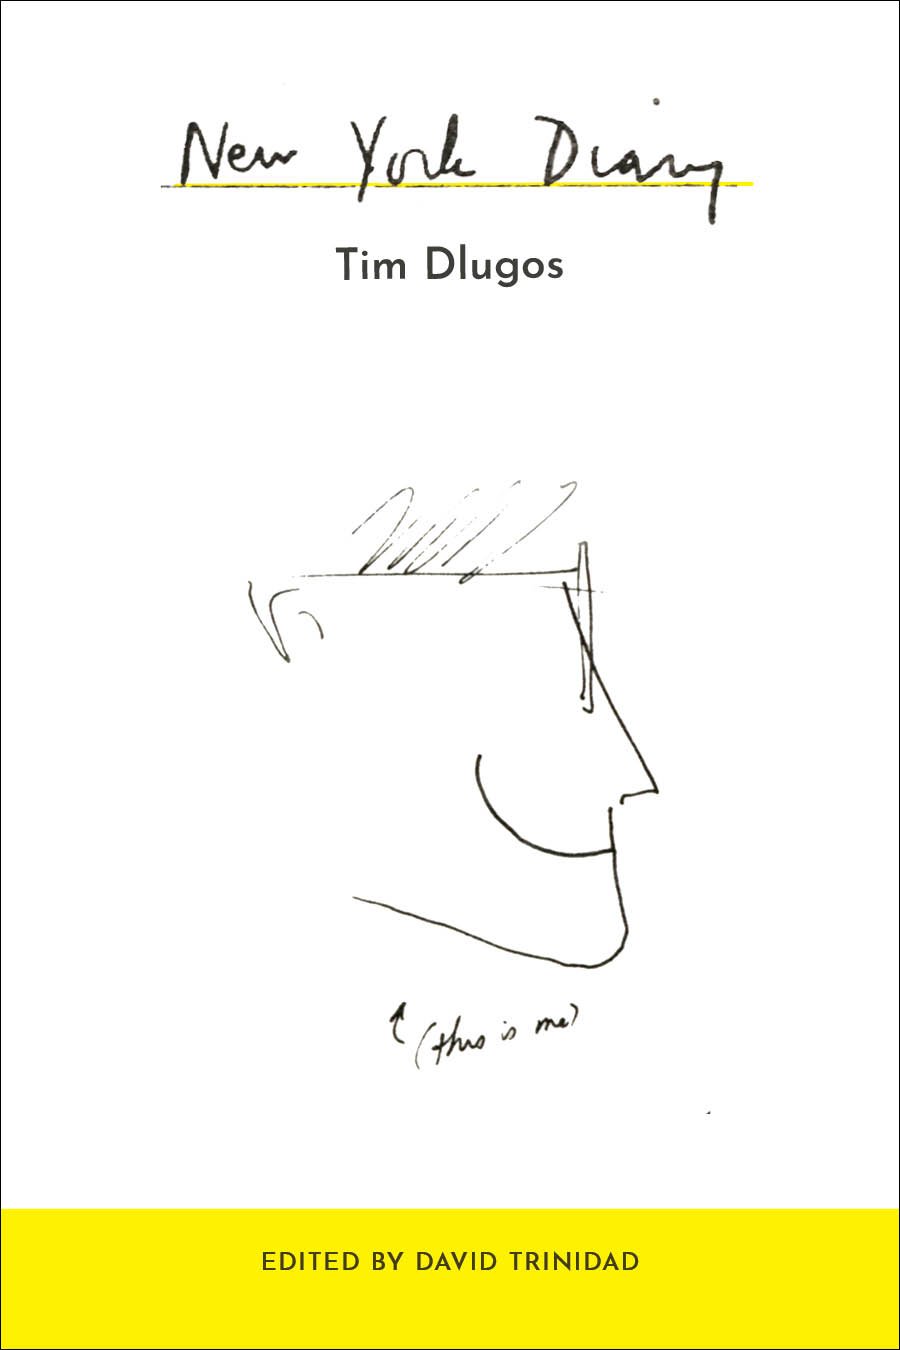 New York Diary by Tim Dlugos, Edited by David Trinidad